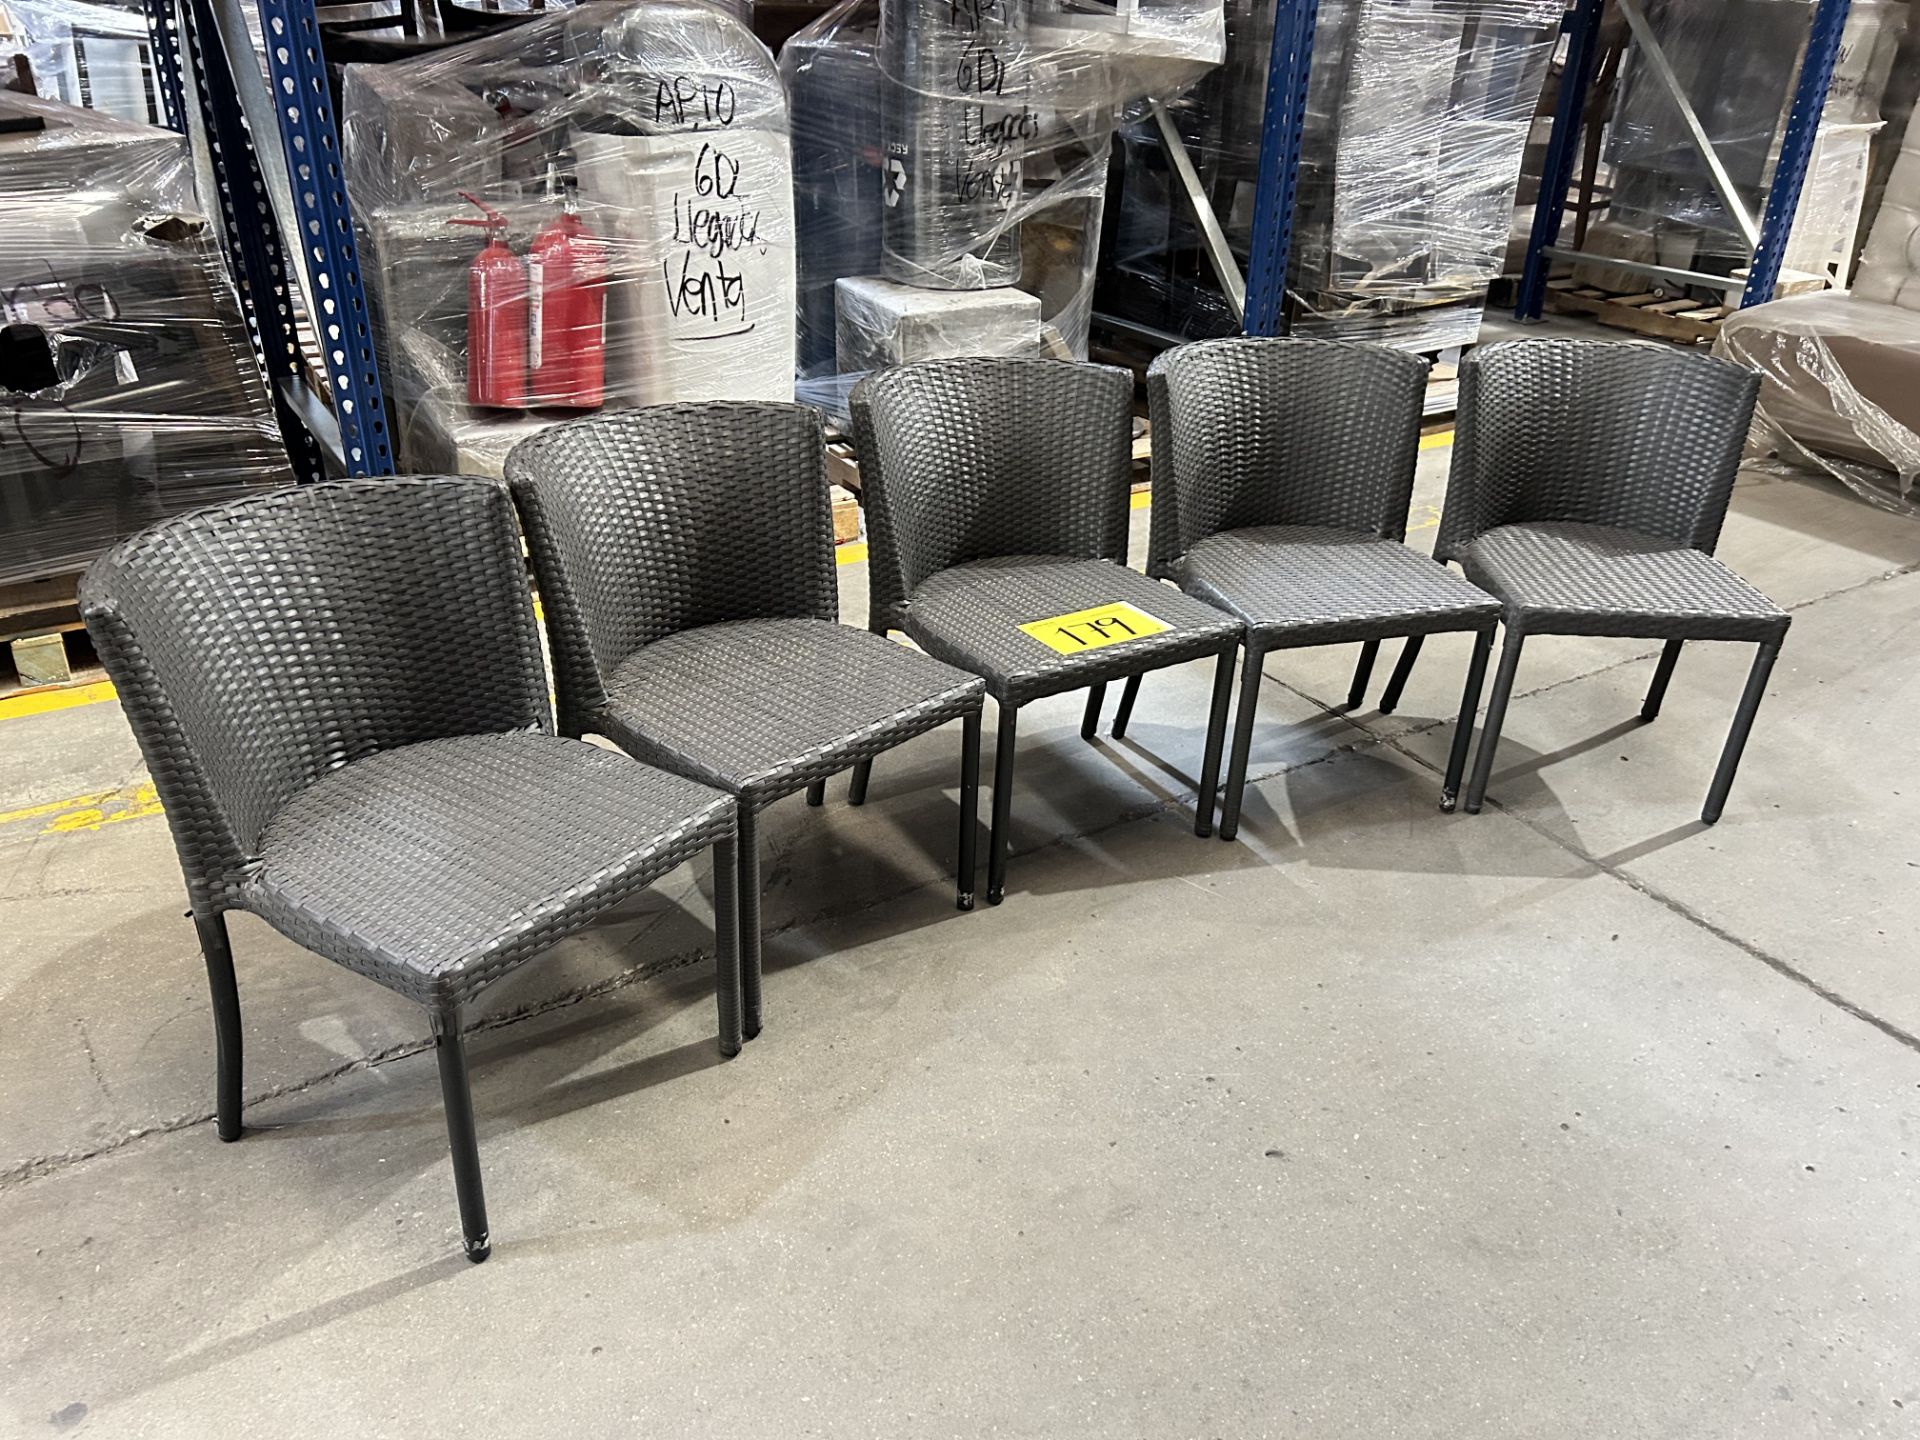 5 sillas de ratán respaldo curvo para exterior Color Café Medidas 55 cm x 62 cm x 74 cm (Equipo Usa - Bild 2 aus 5